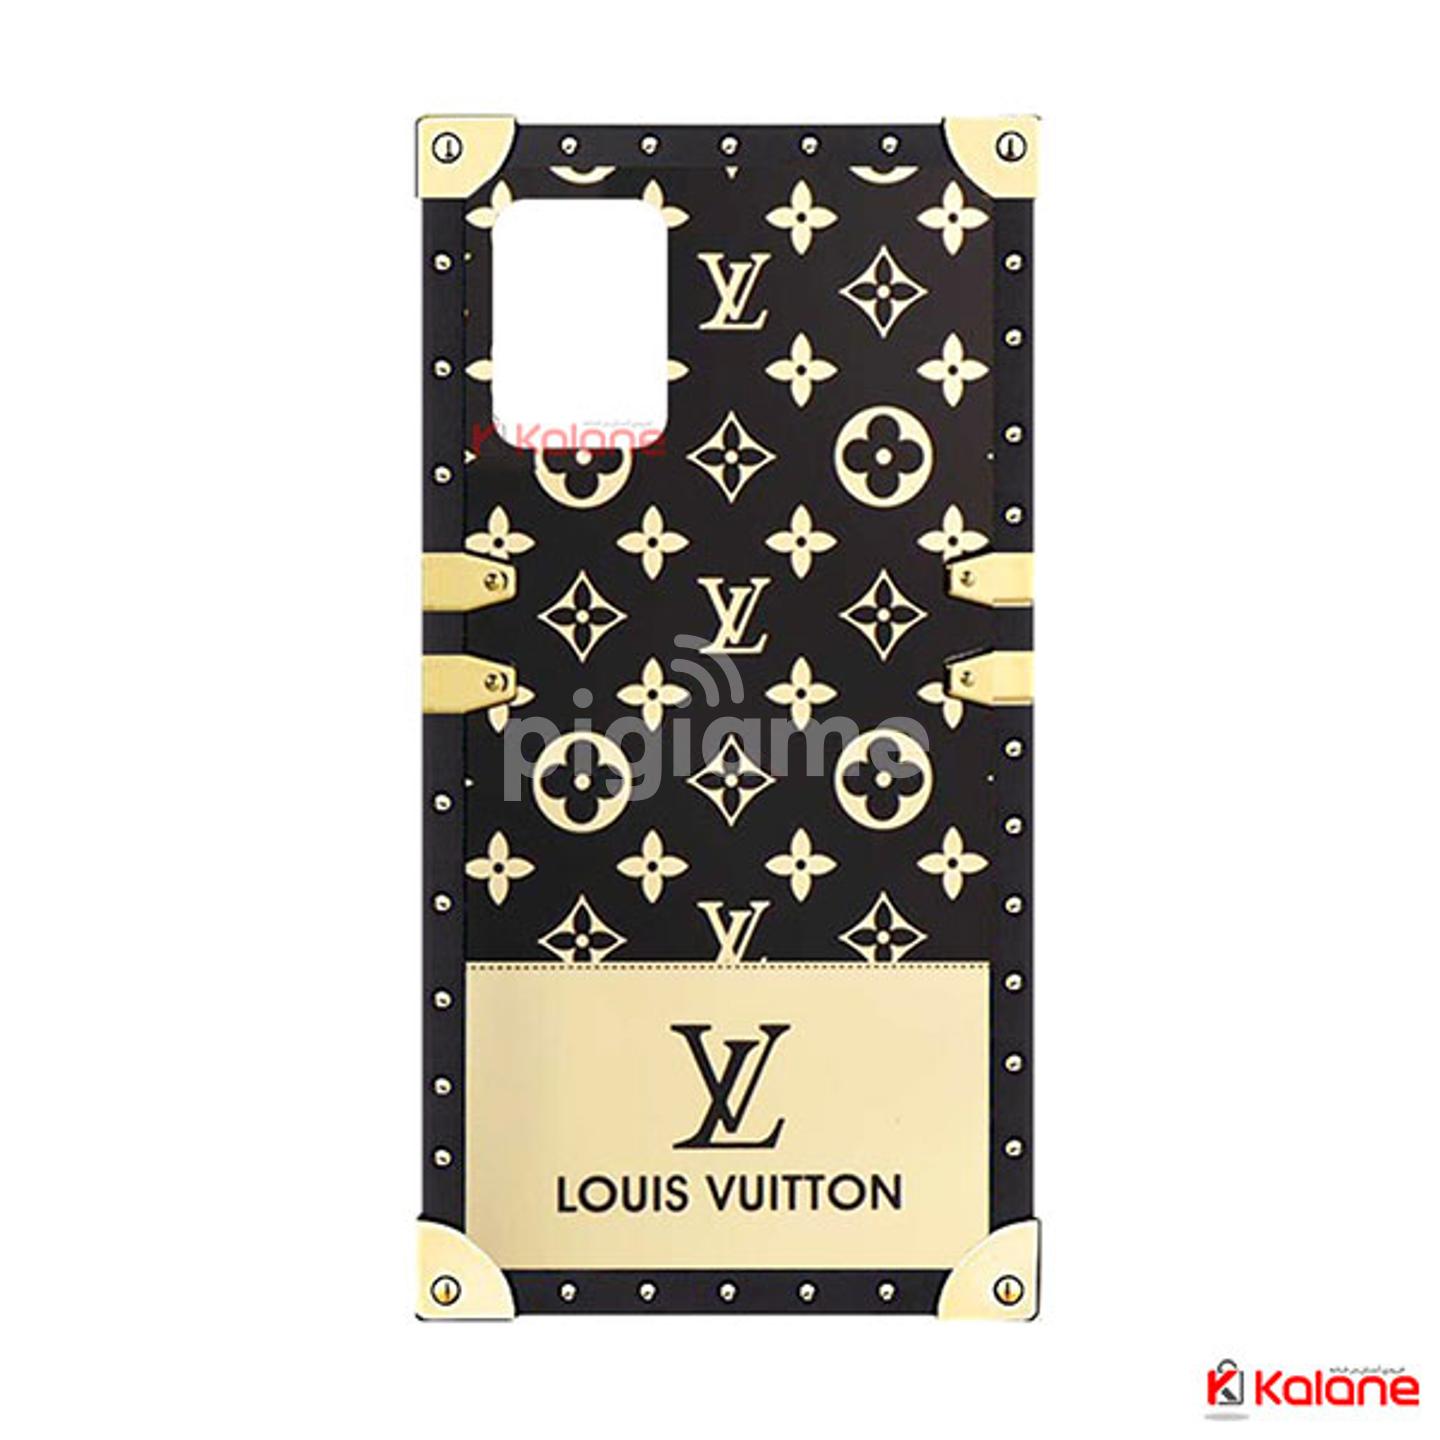 LV Louis Vuitton Samsung Galaxy S8+ Case / Cover in Nairobi